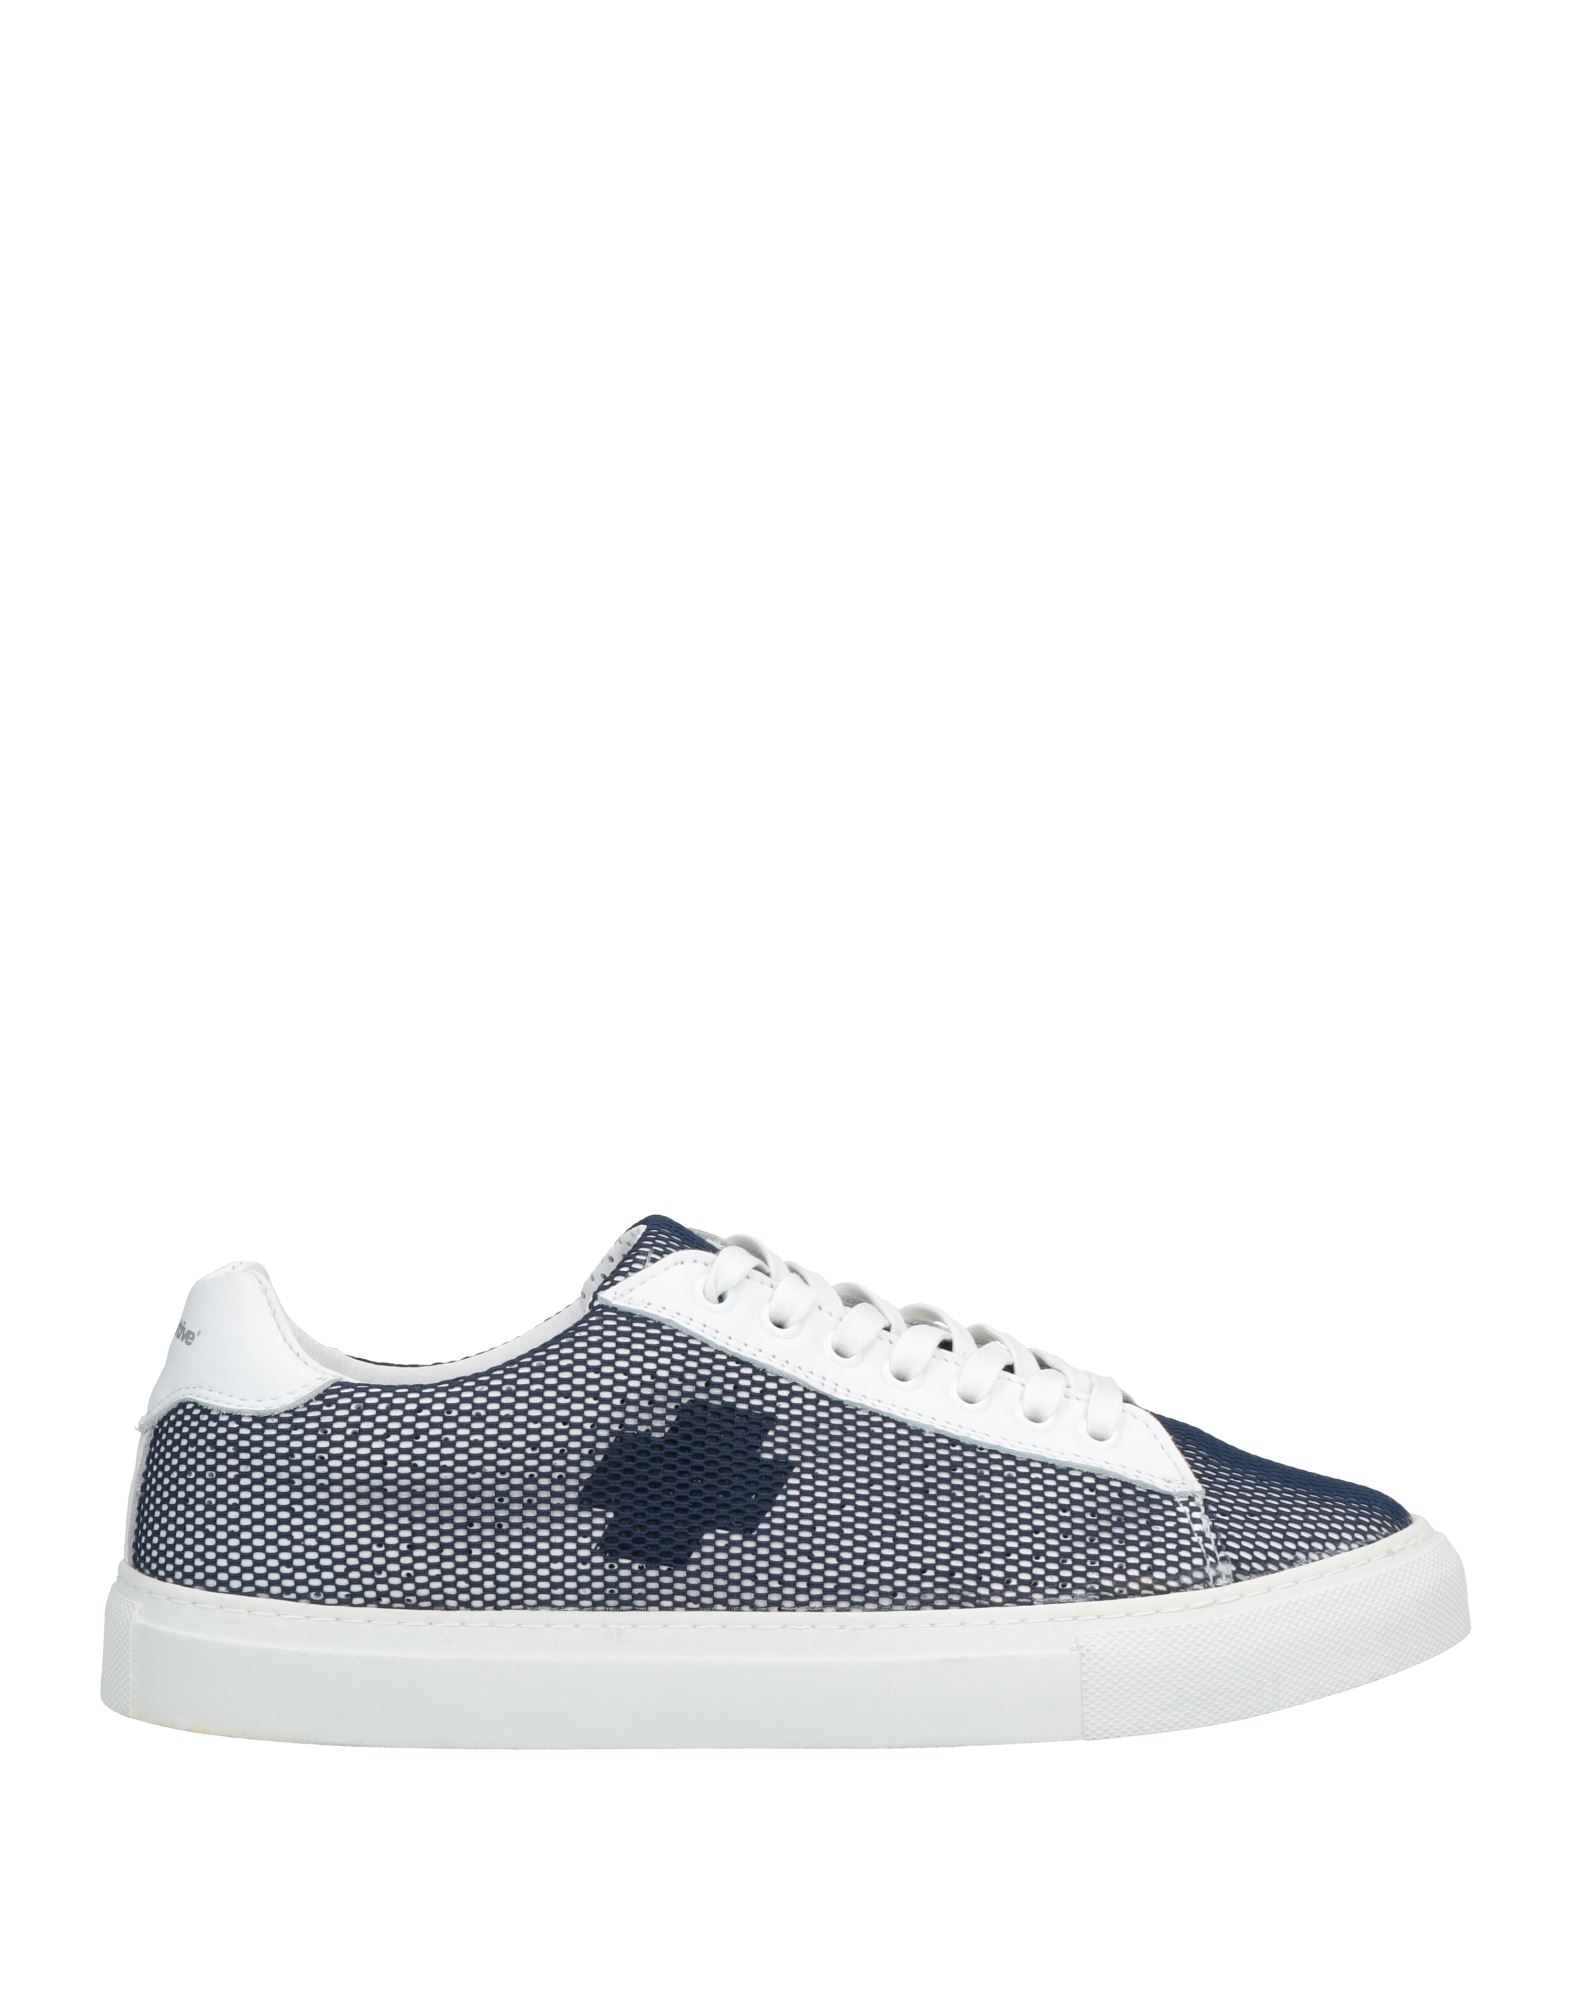 Shop Bepositive Man Sneakers Navy Blue Size 9 Soft Leather, Textile Fibers